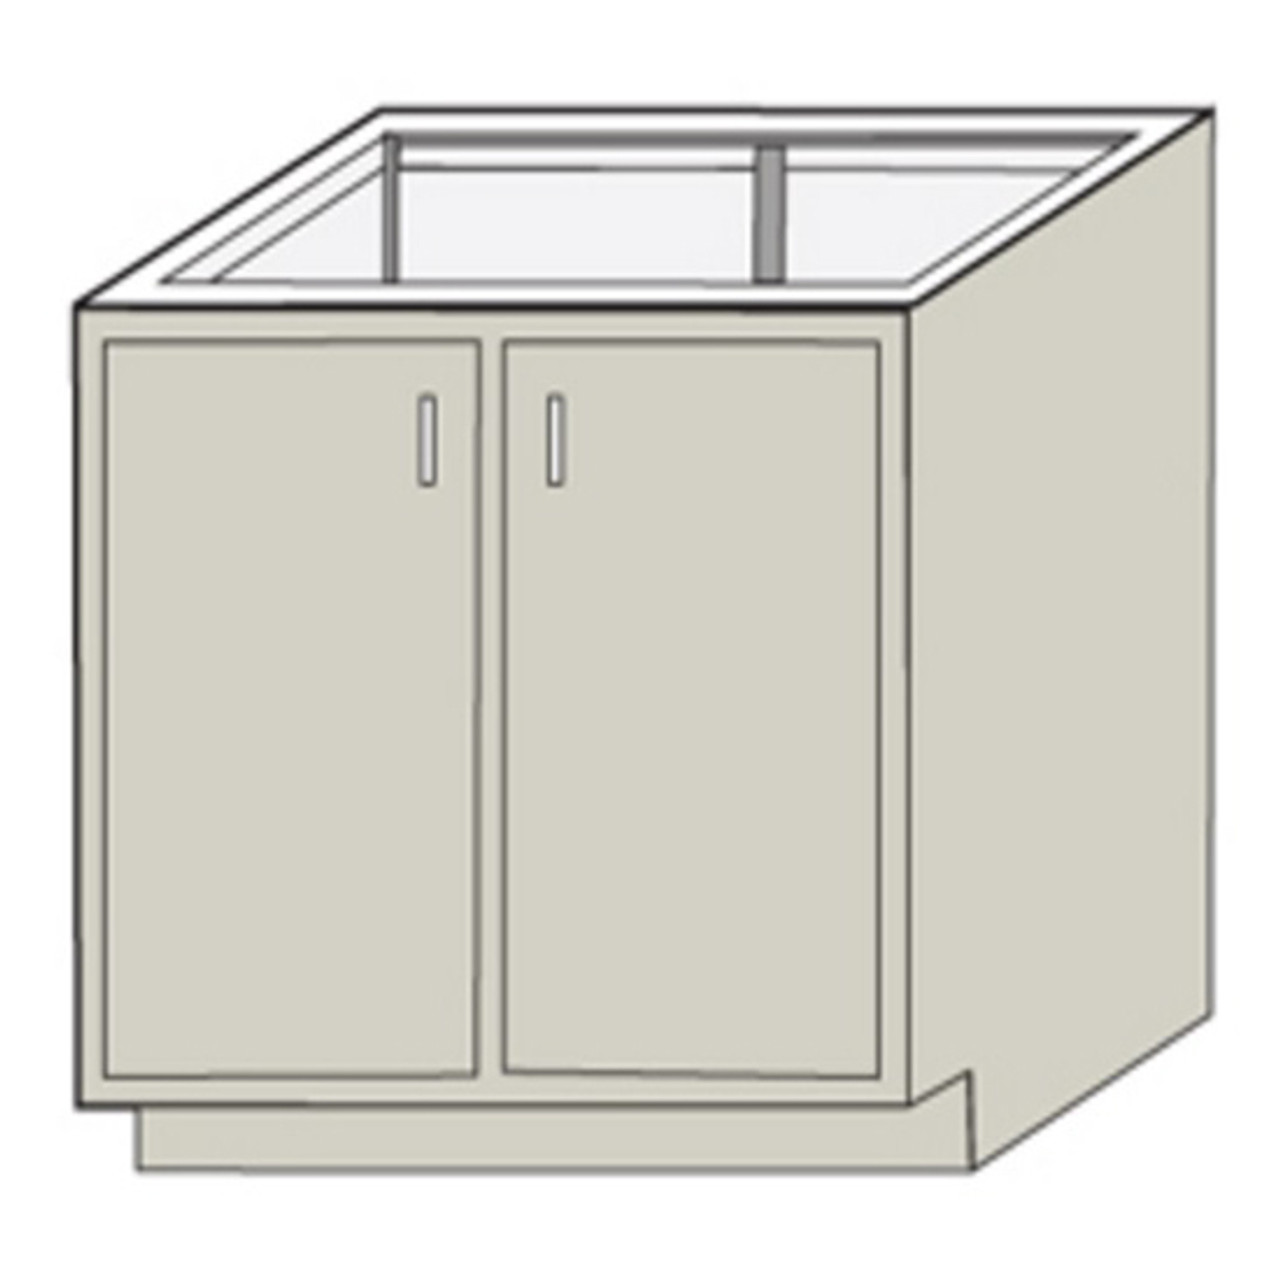 HEMCO 53011 Standard Base Cabinet, 30" x 22" x 35"